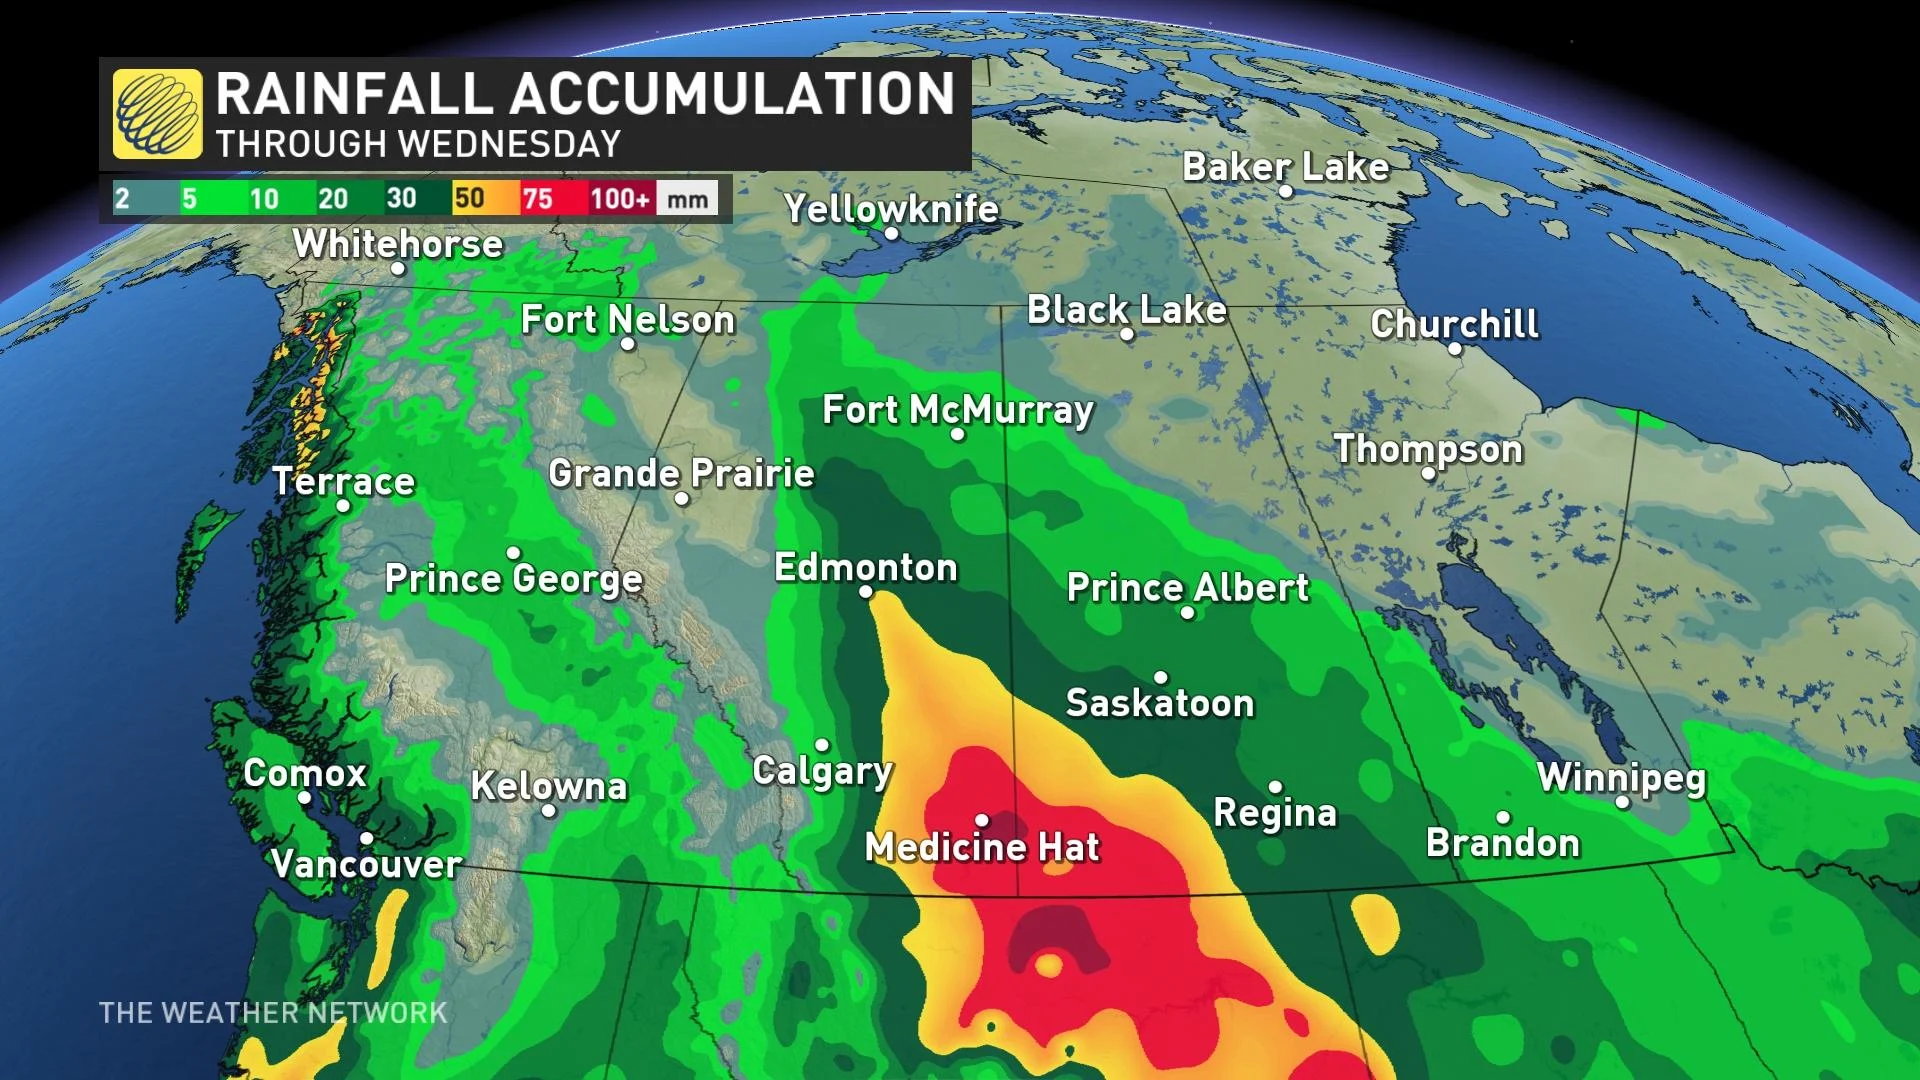 Baron_Prairies rainfall map through Wednesday_May 6